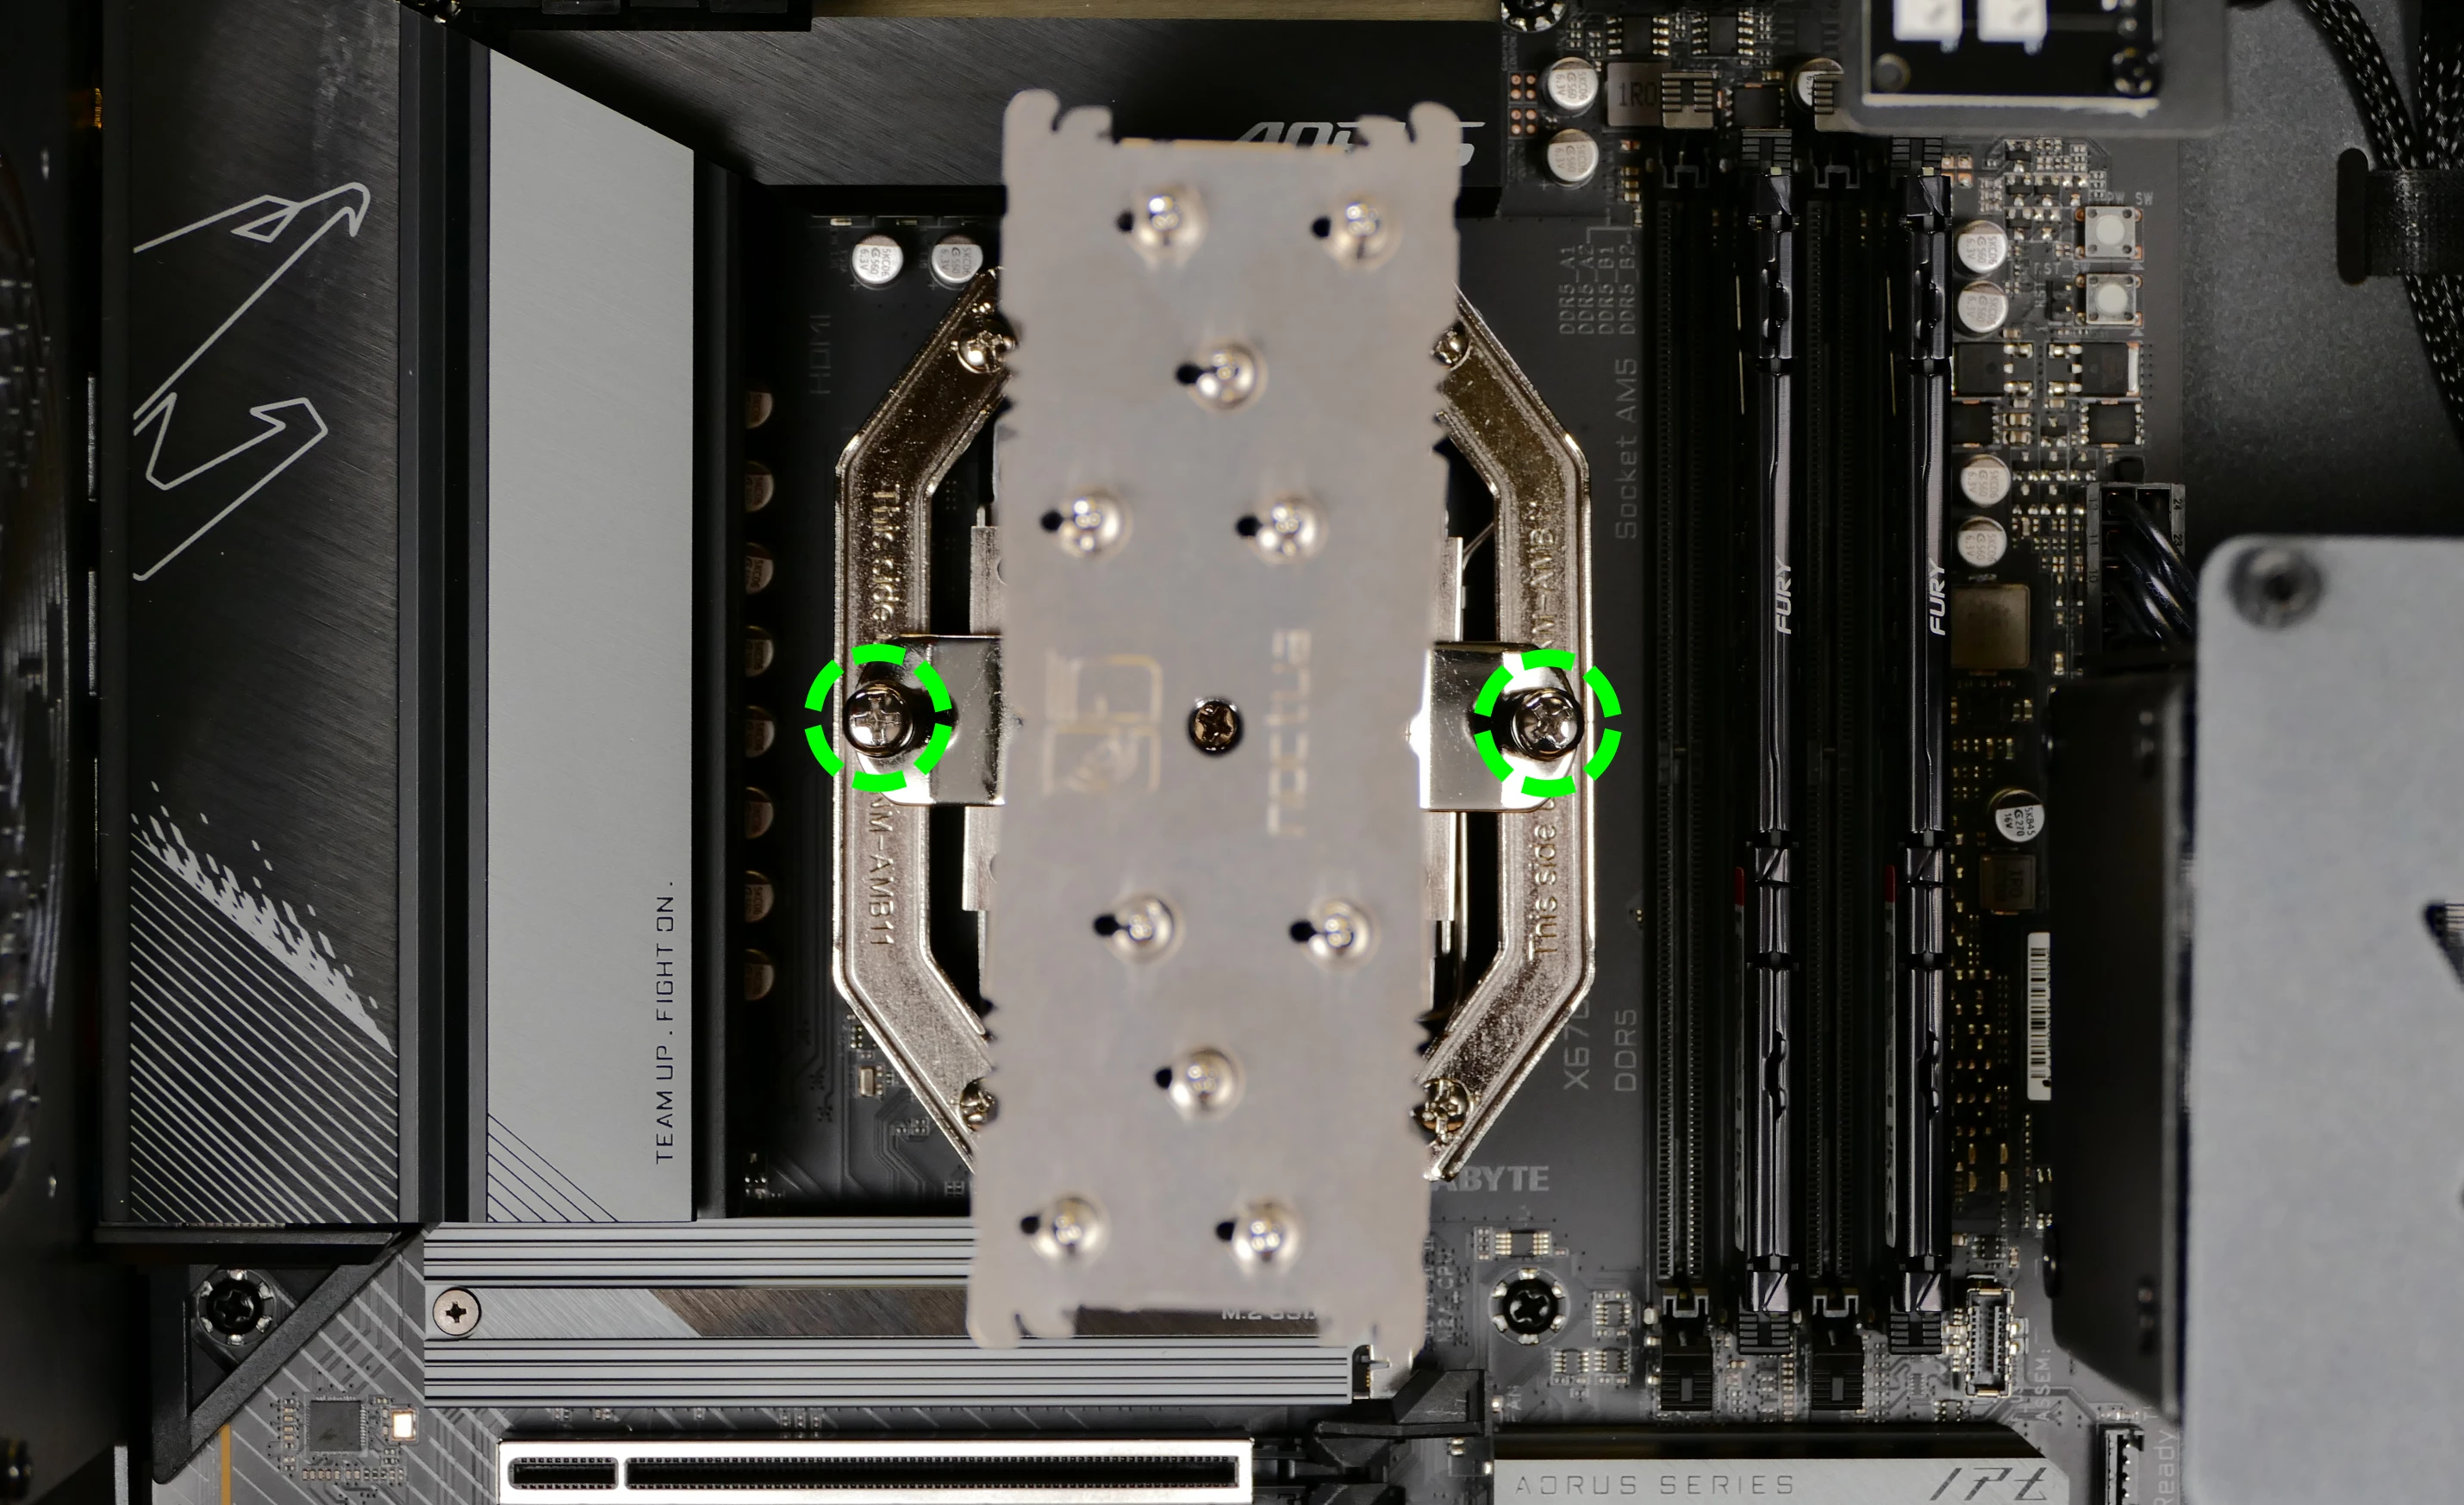 CPU cooler screws